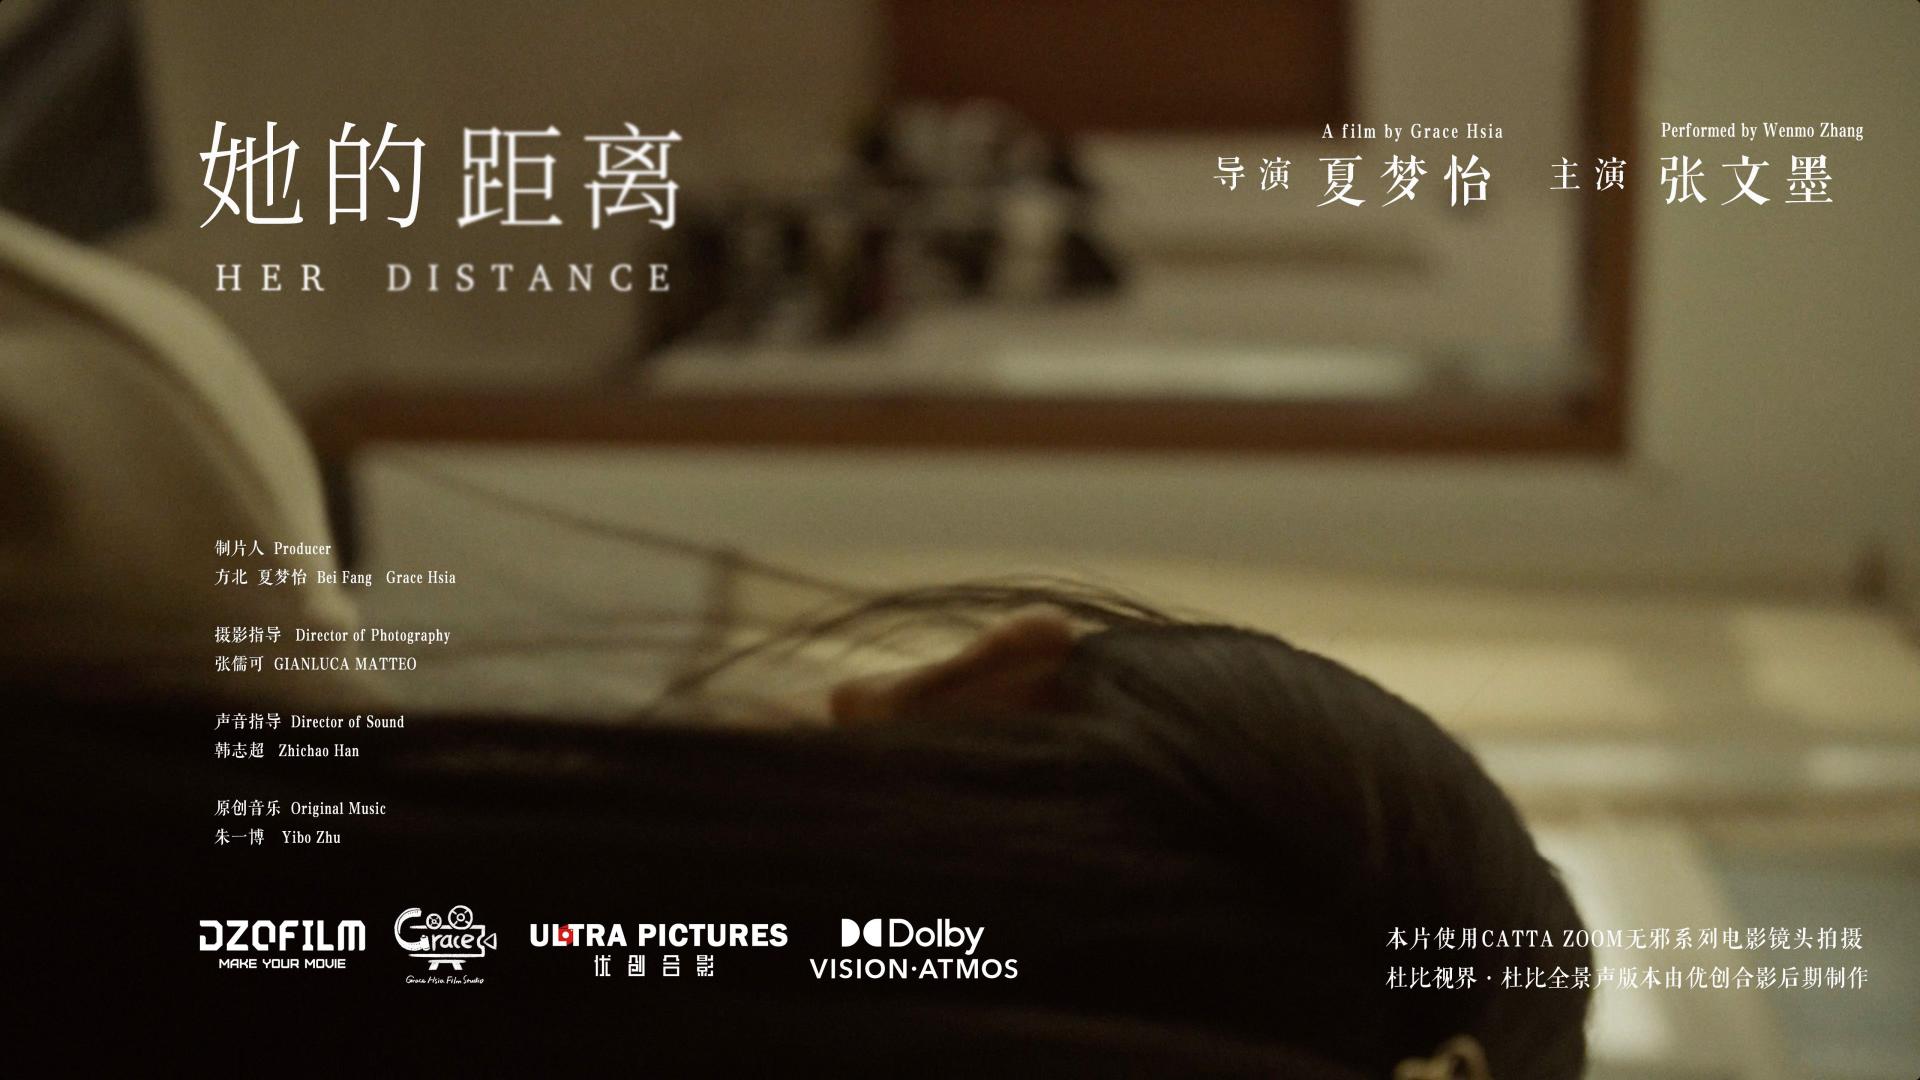 DZOFILM x 夏梦怡 | 她的距离「无邪」系列变焦电影镜头情绪样片